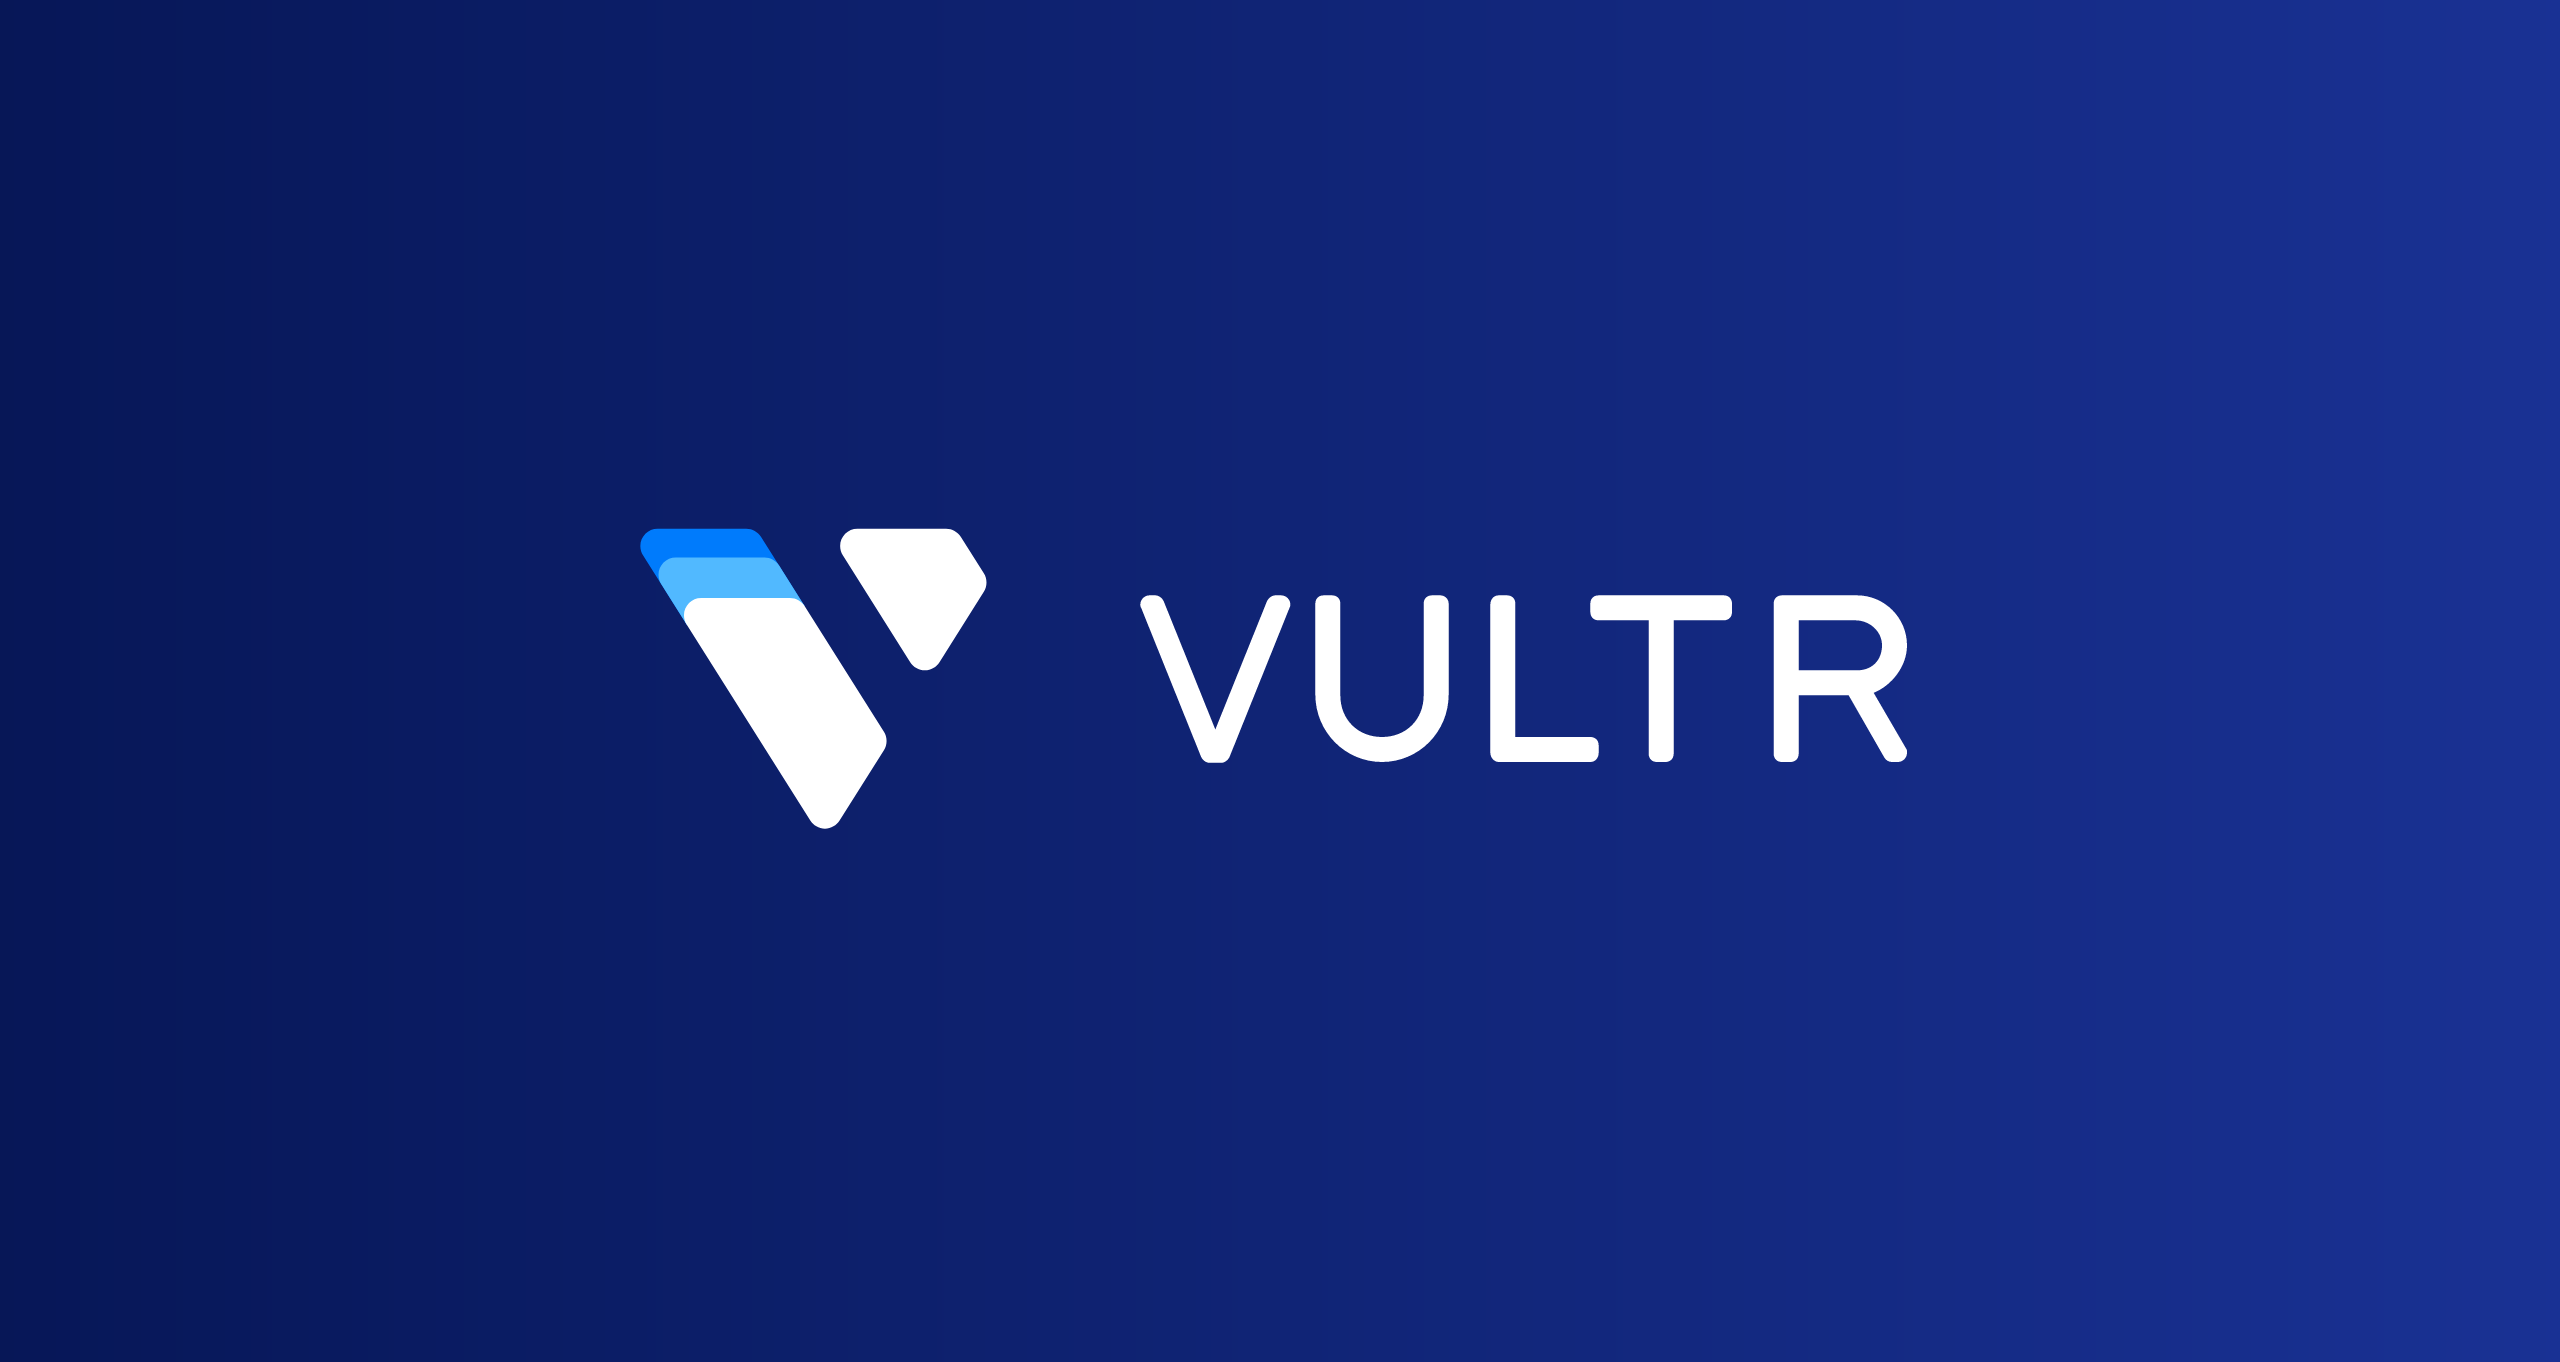 Vultr Logo